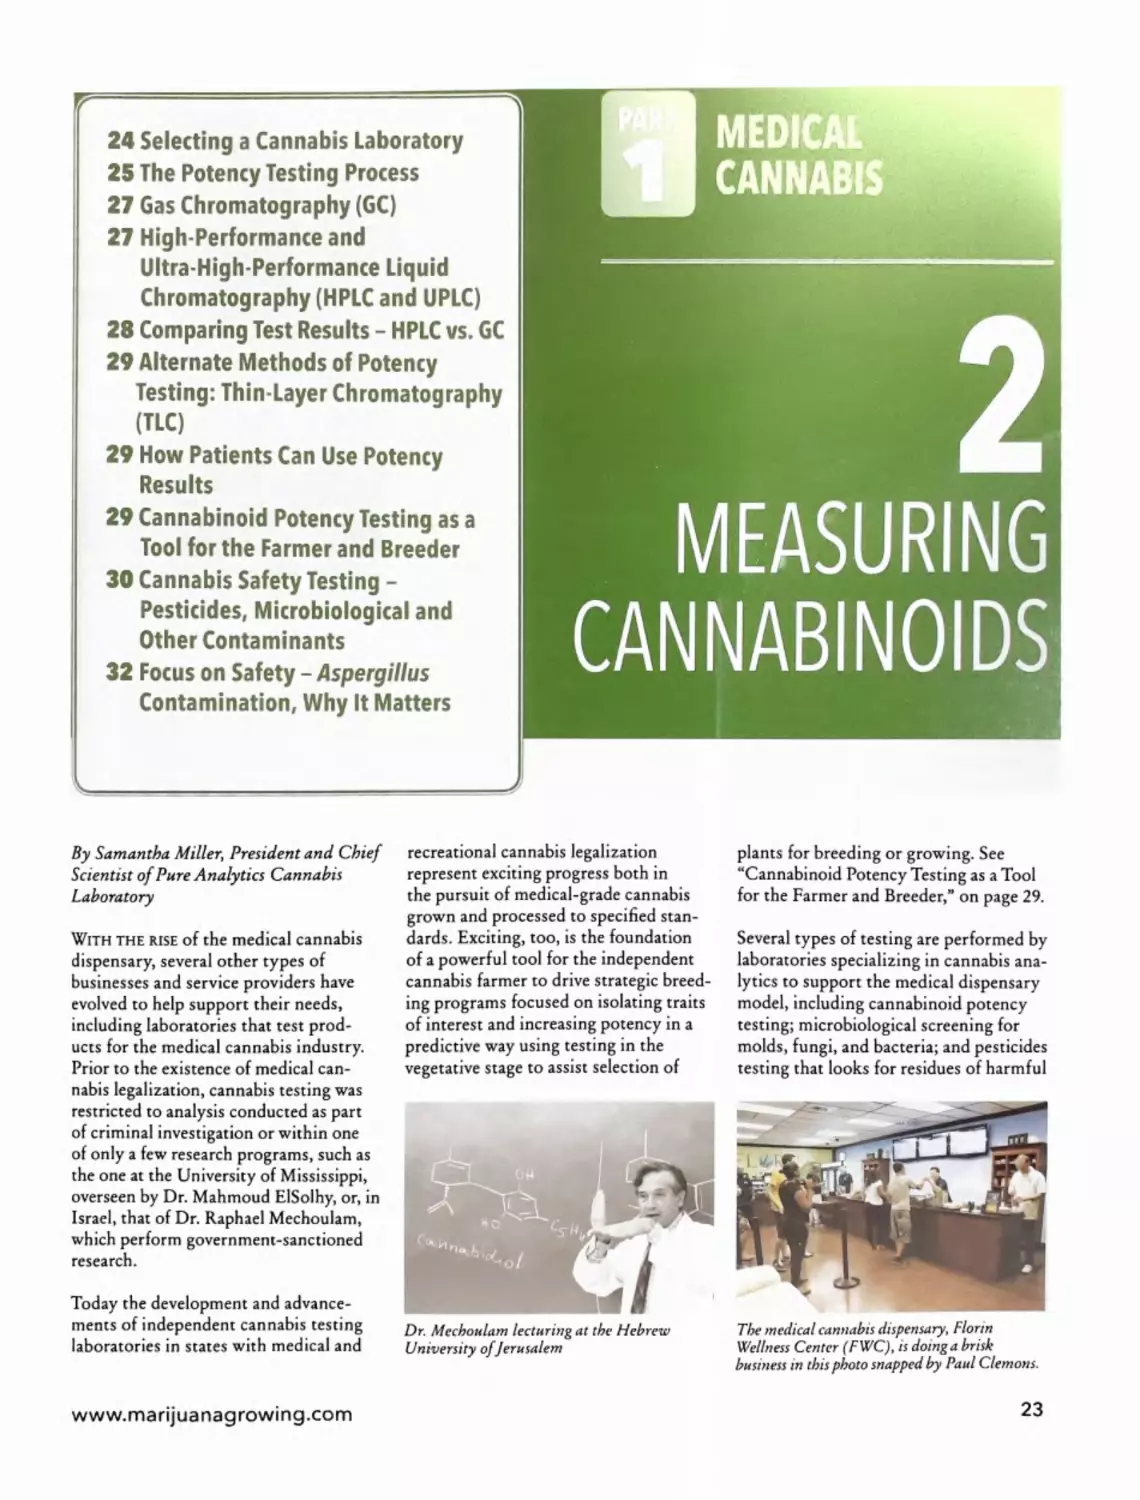 Chapter 2 - Measuring Cannabinoids